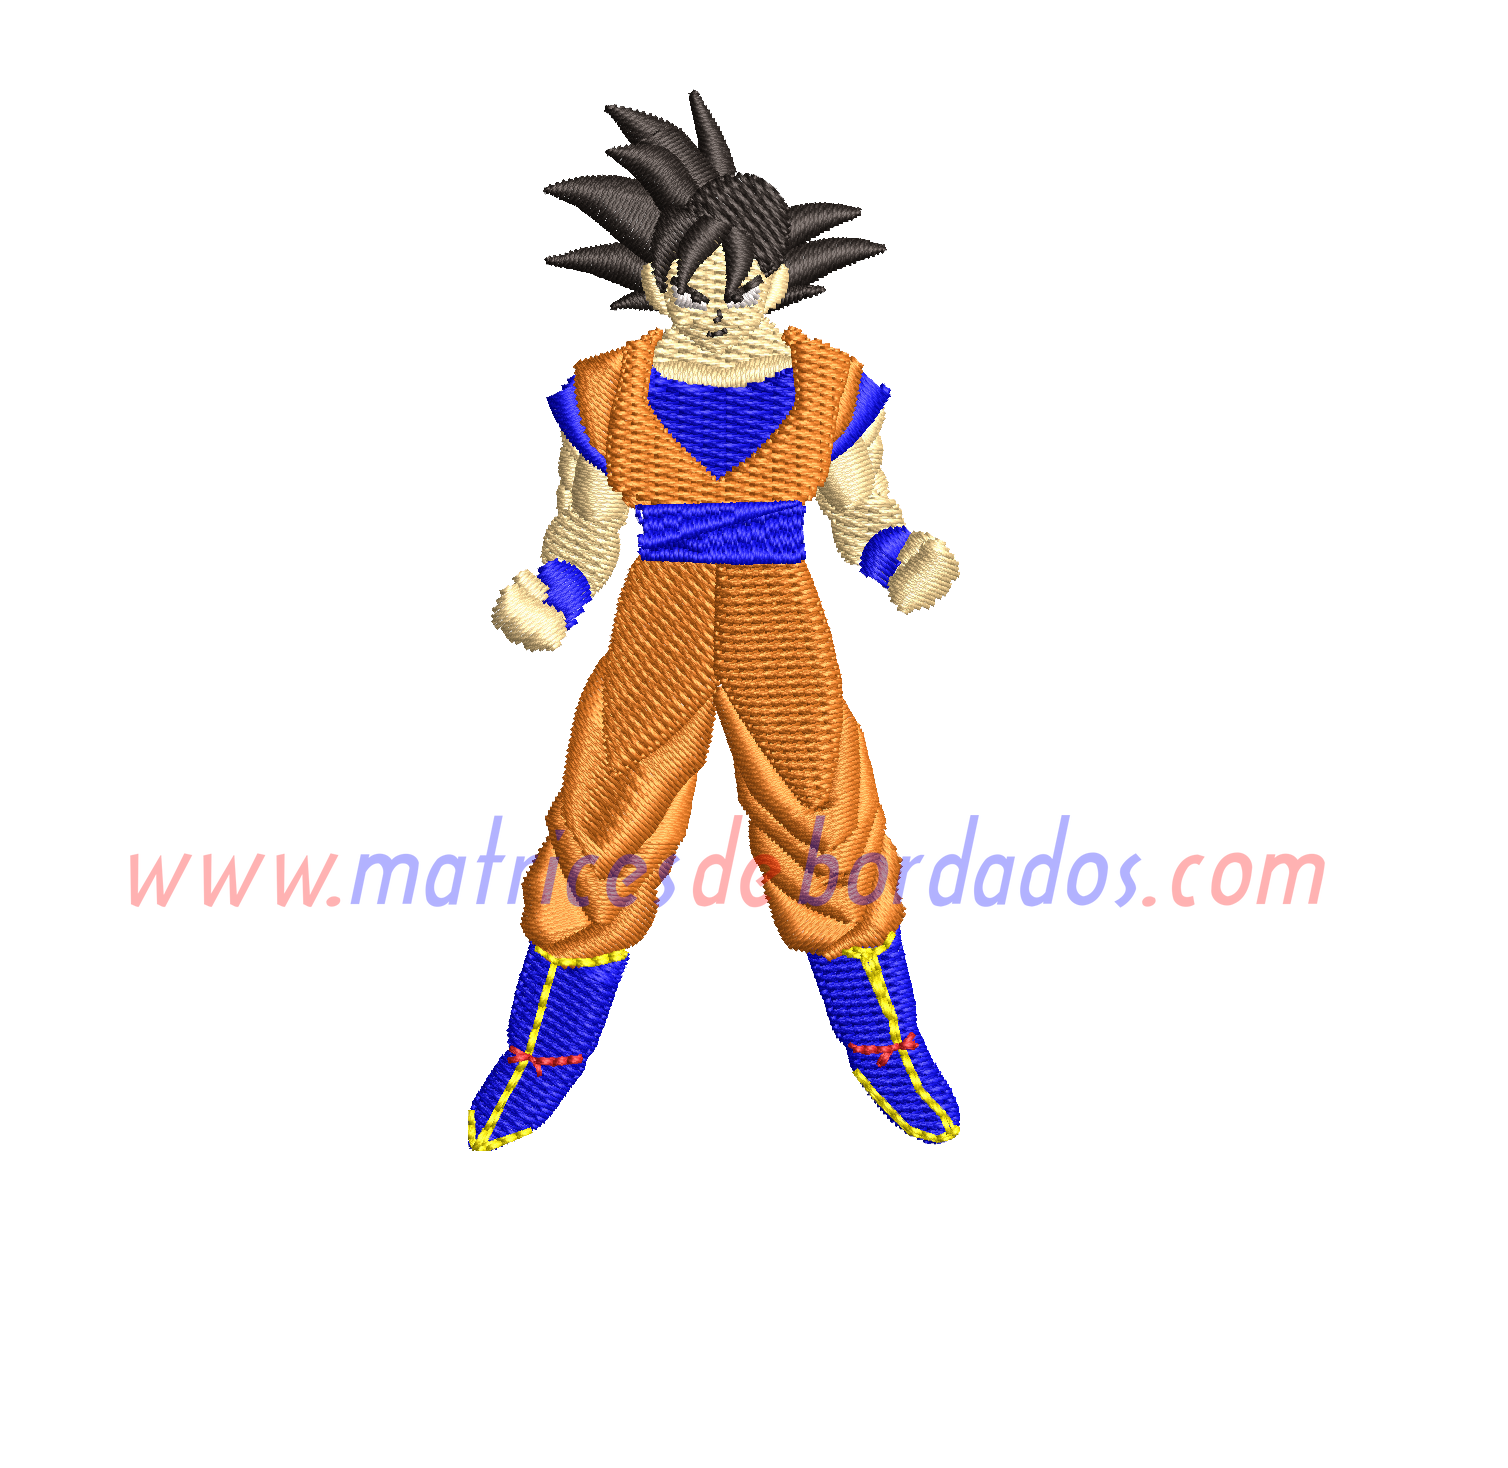 HR61GQ - Goku